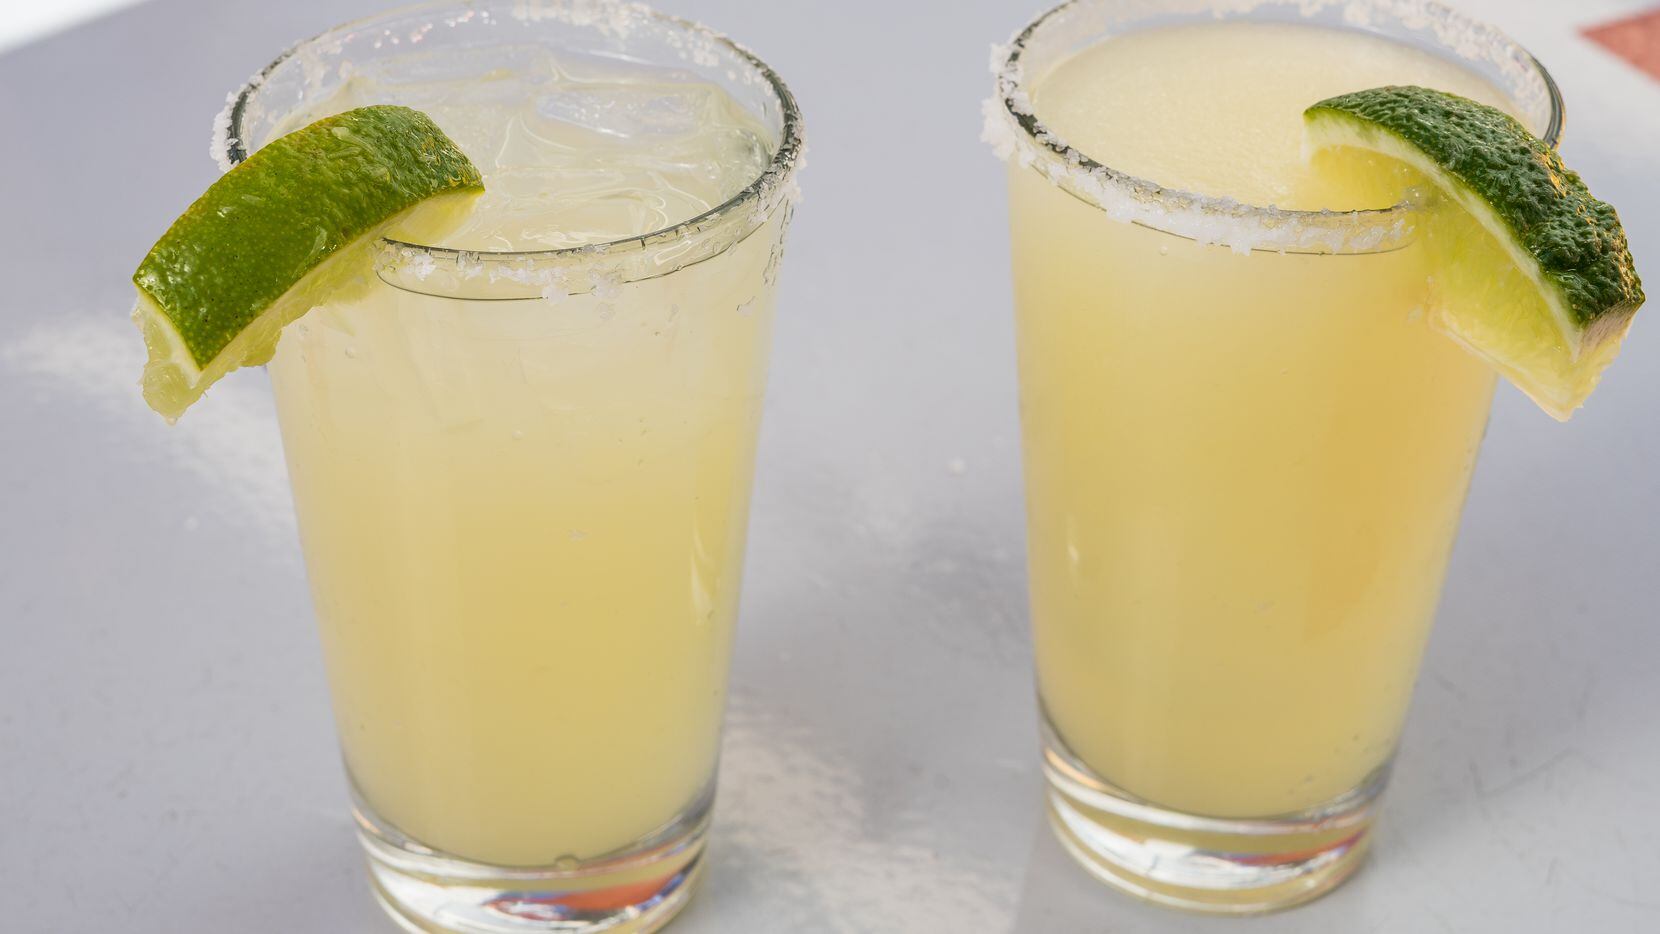 El Fenix will serve $1 8-ounce margaritas in celebration of National Margarita Day on Feb. 22.